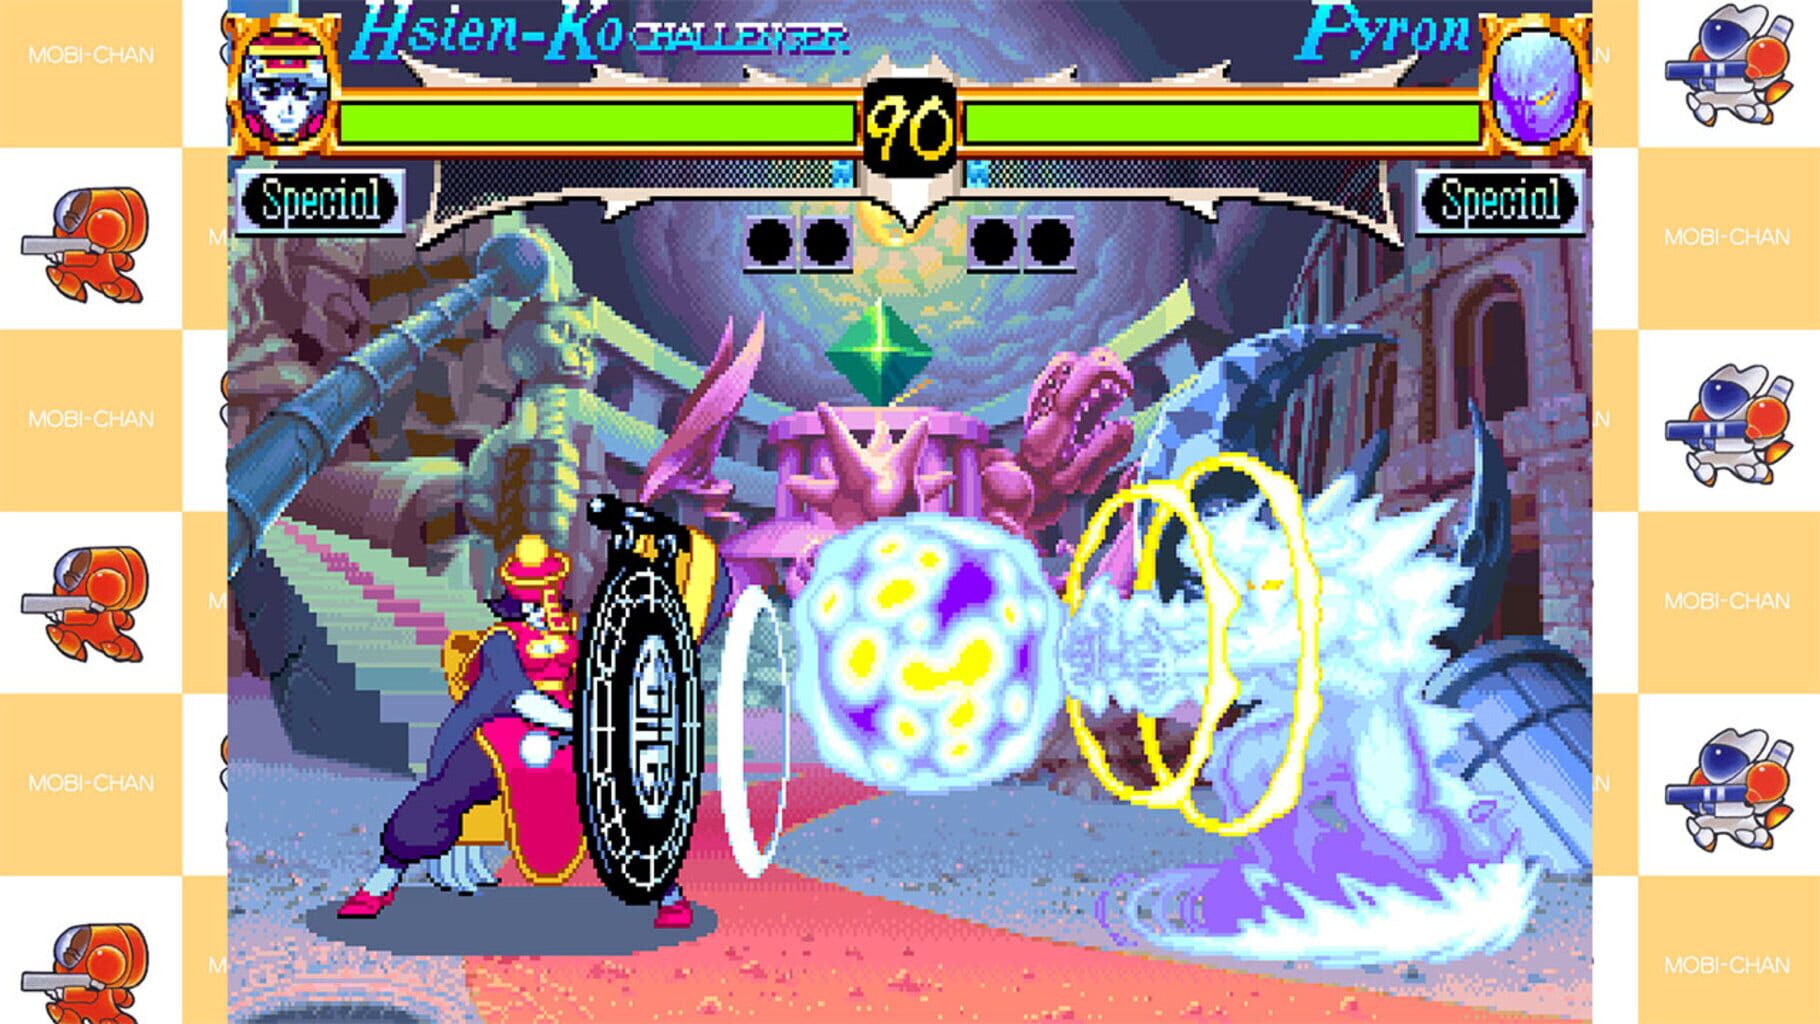 Capcom Arcade 2nd Stadium: Night Warriors - Darkstalkers' Revenge screenshot